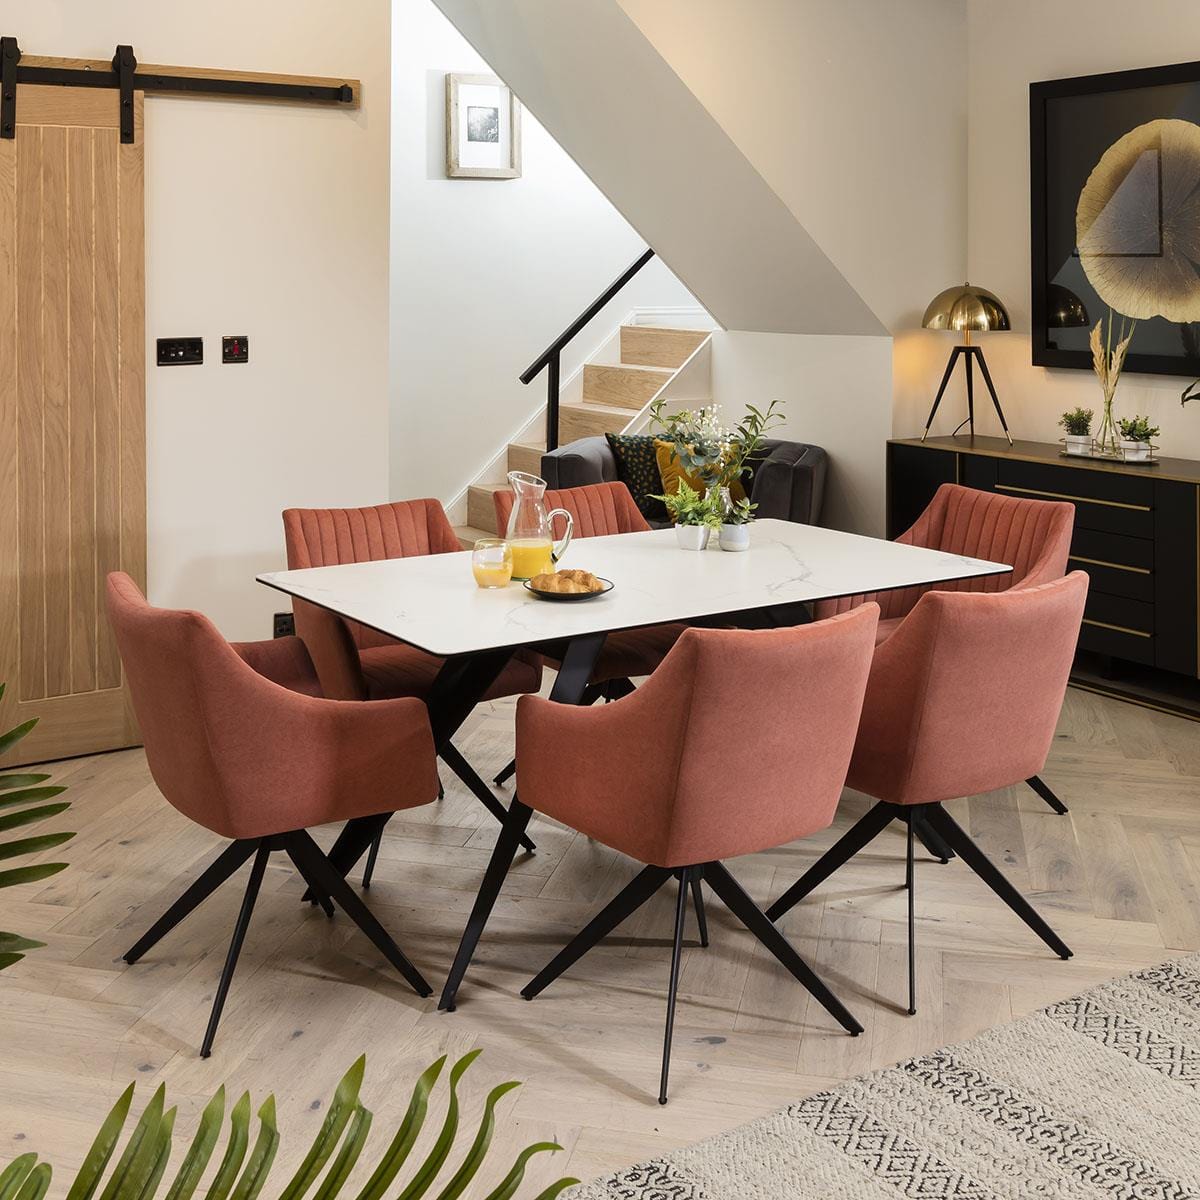 Quatropi Elegant White Marble-Look Table & Pink Chairs - 8 Seater Ceramic Dining Set